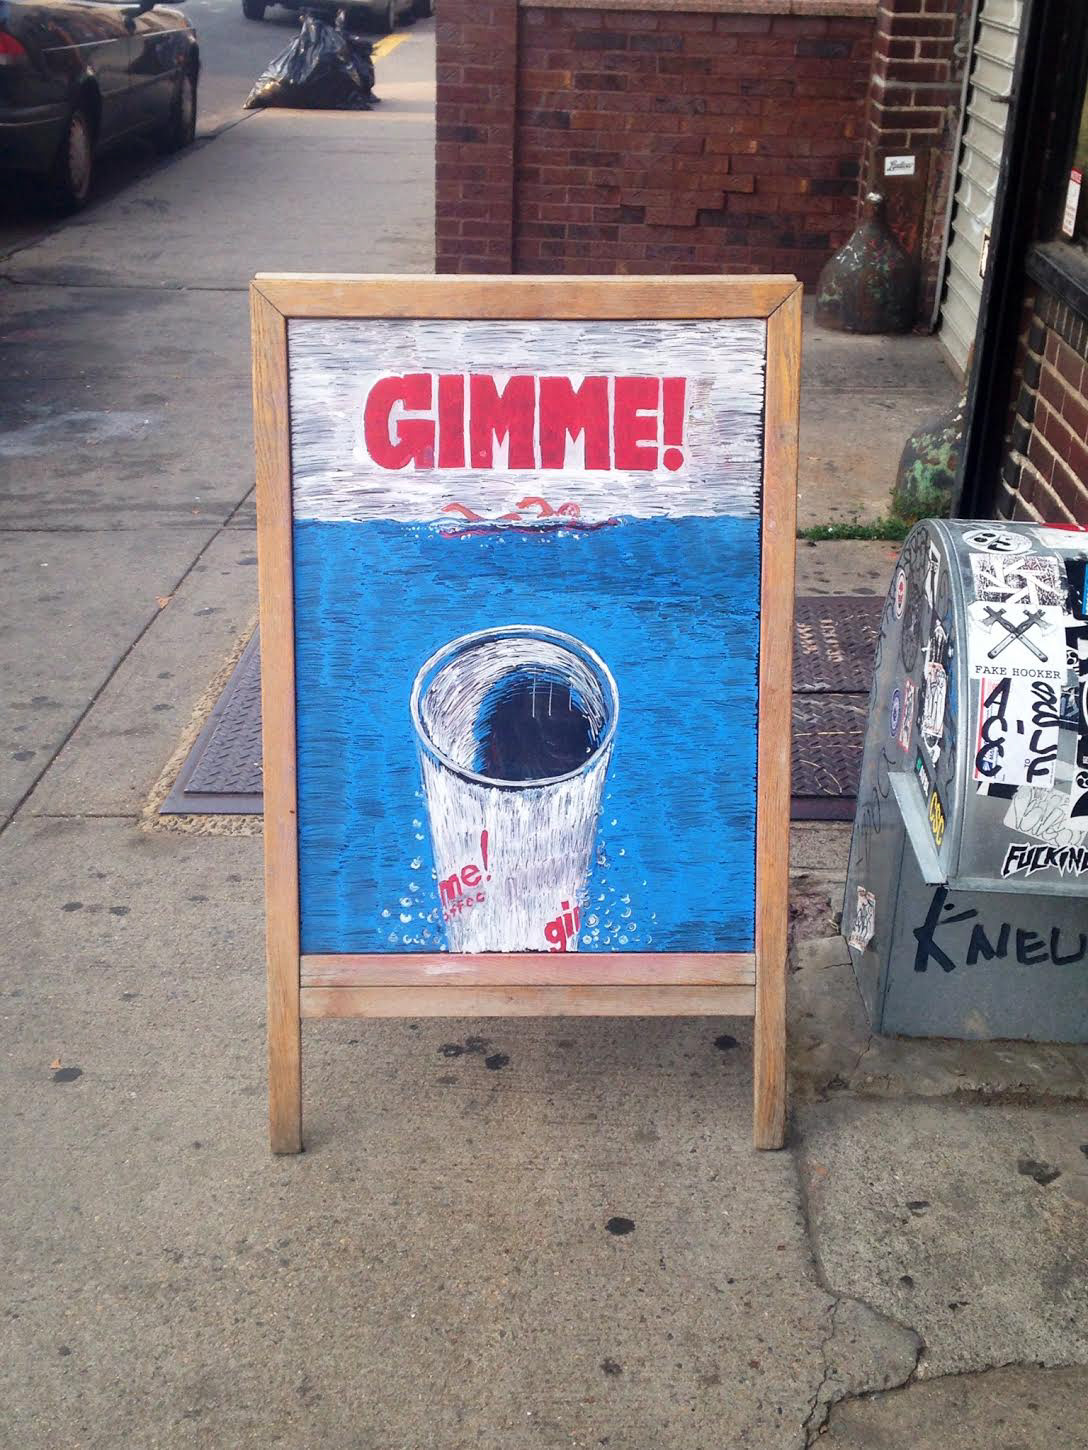 sidewalk sign aframe Brooklyn williamsburg coffee shop Coffee Advertising  pop culture Movies music